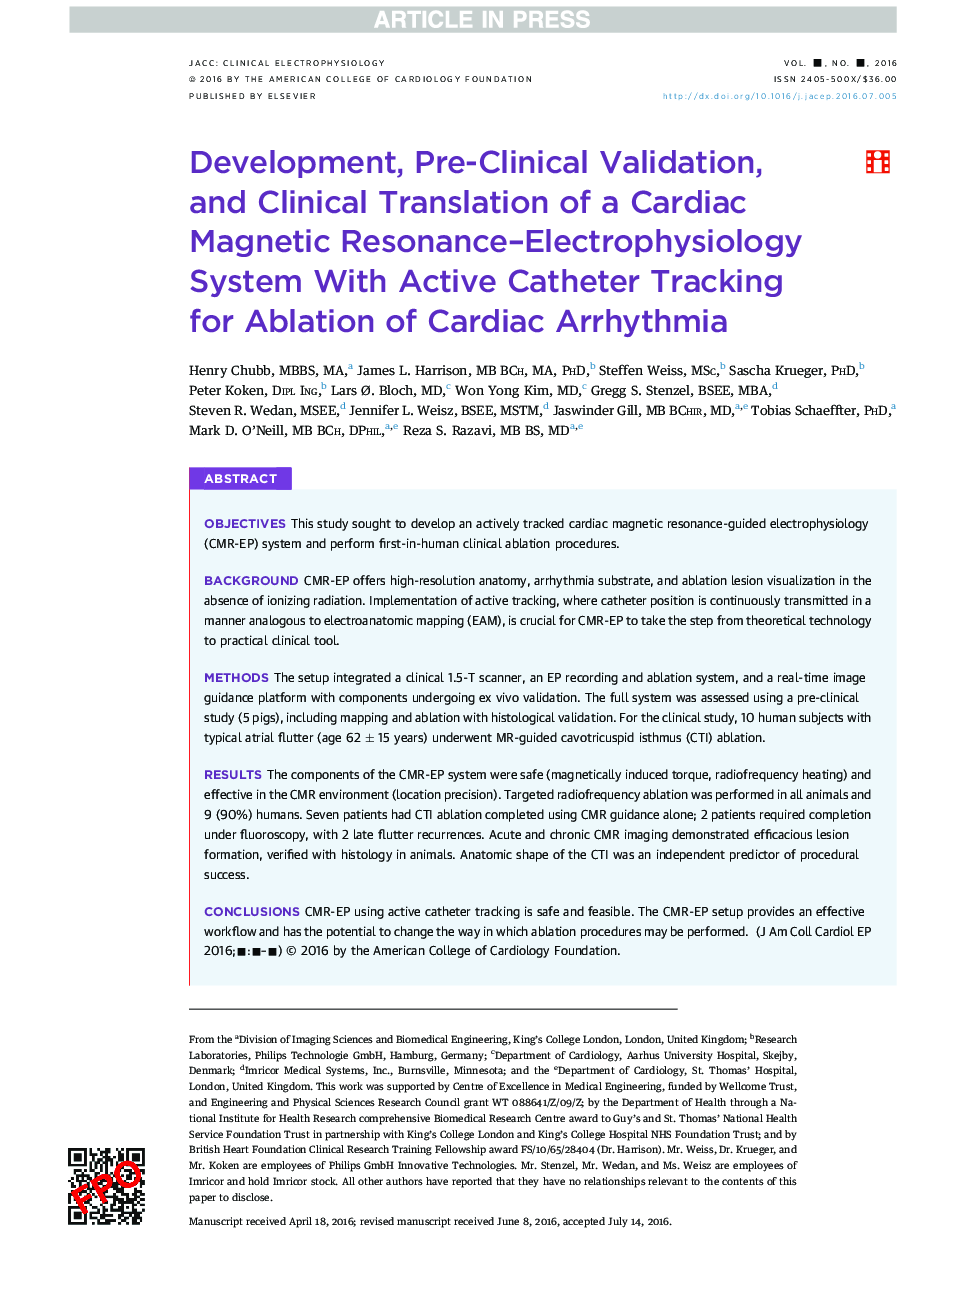 Development, Preclinical Validation, andÂ Clinical Translation of a Cardiac Magnetic Resonance - Electrophysiology System WithÂ Active Catheter Tracking forÂ Ablation ofÂ Cardiac Arrhythmia